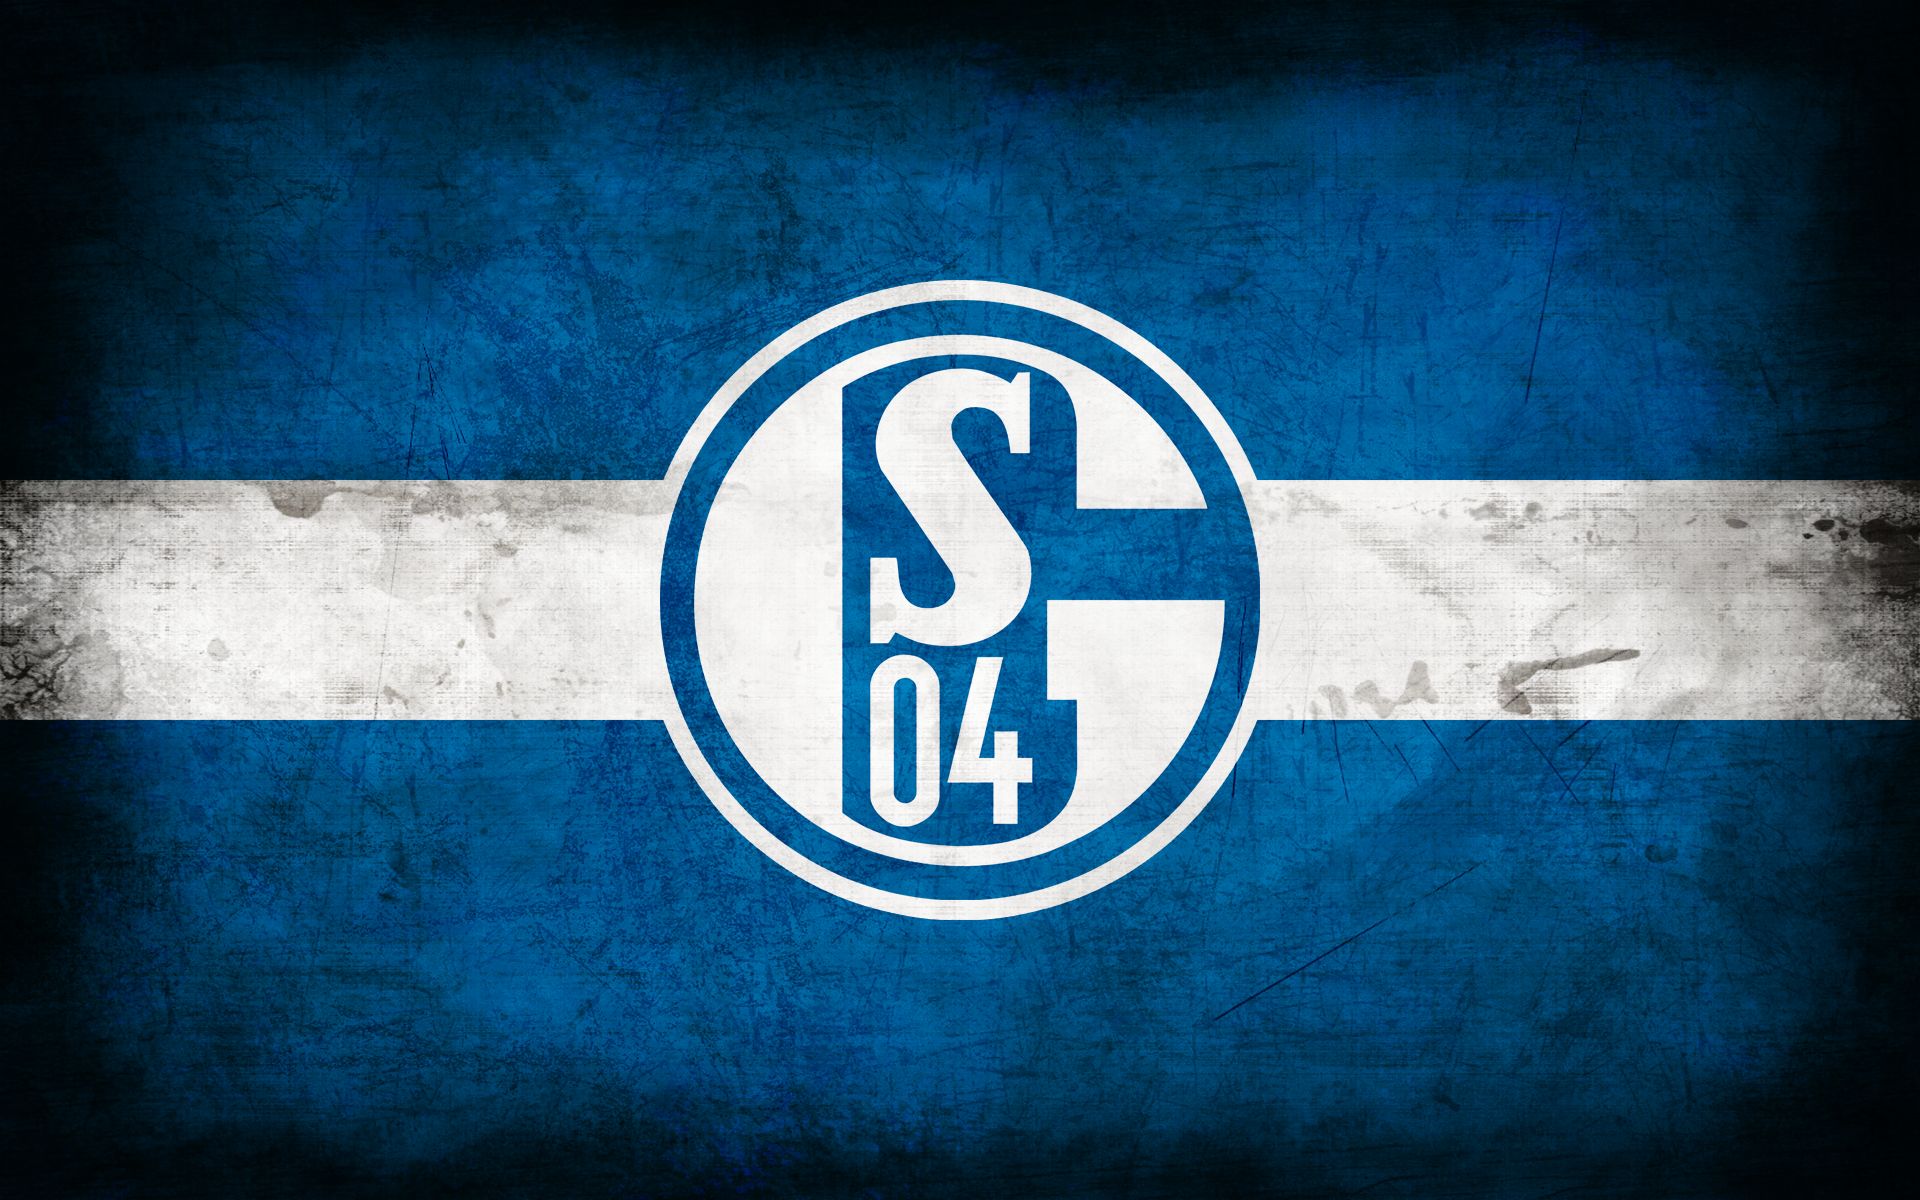 Fc Schalke 04 Wallpapers